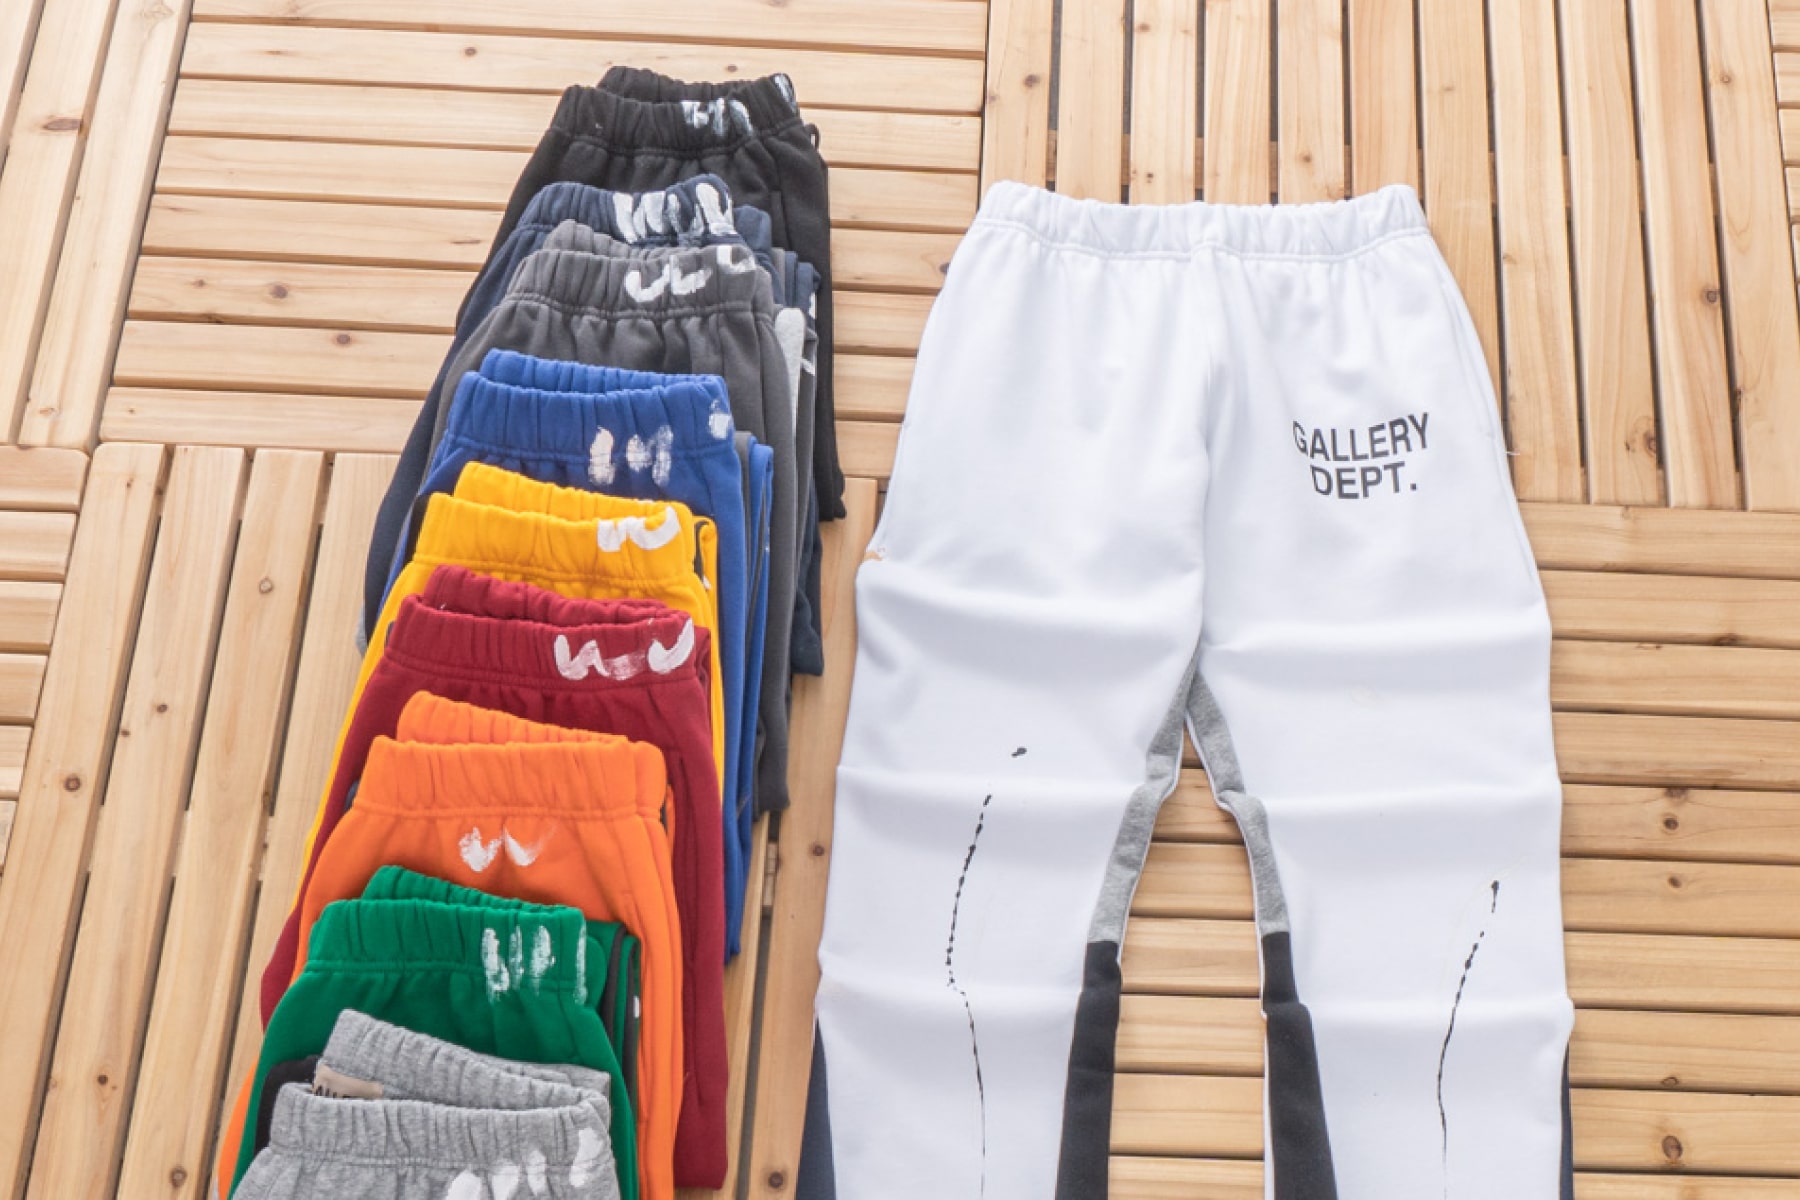 GALLERY DEPT. Logo Flared Cotton Sweatpants in Black for Men